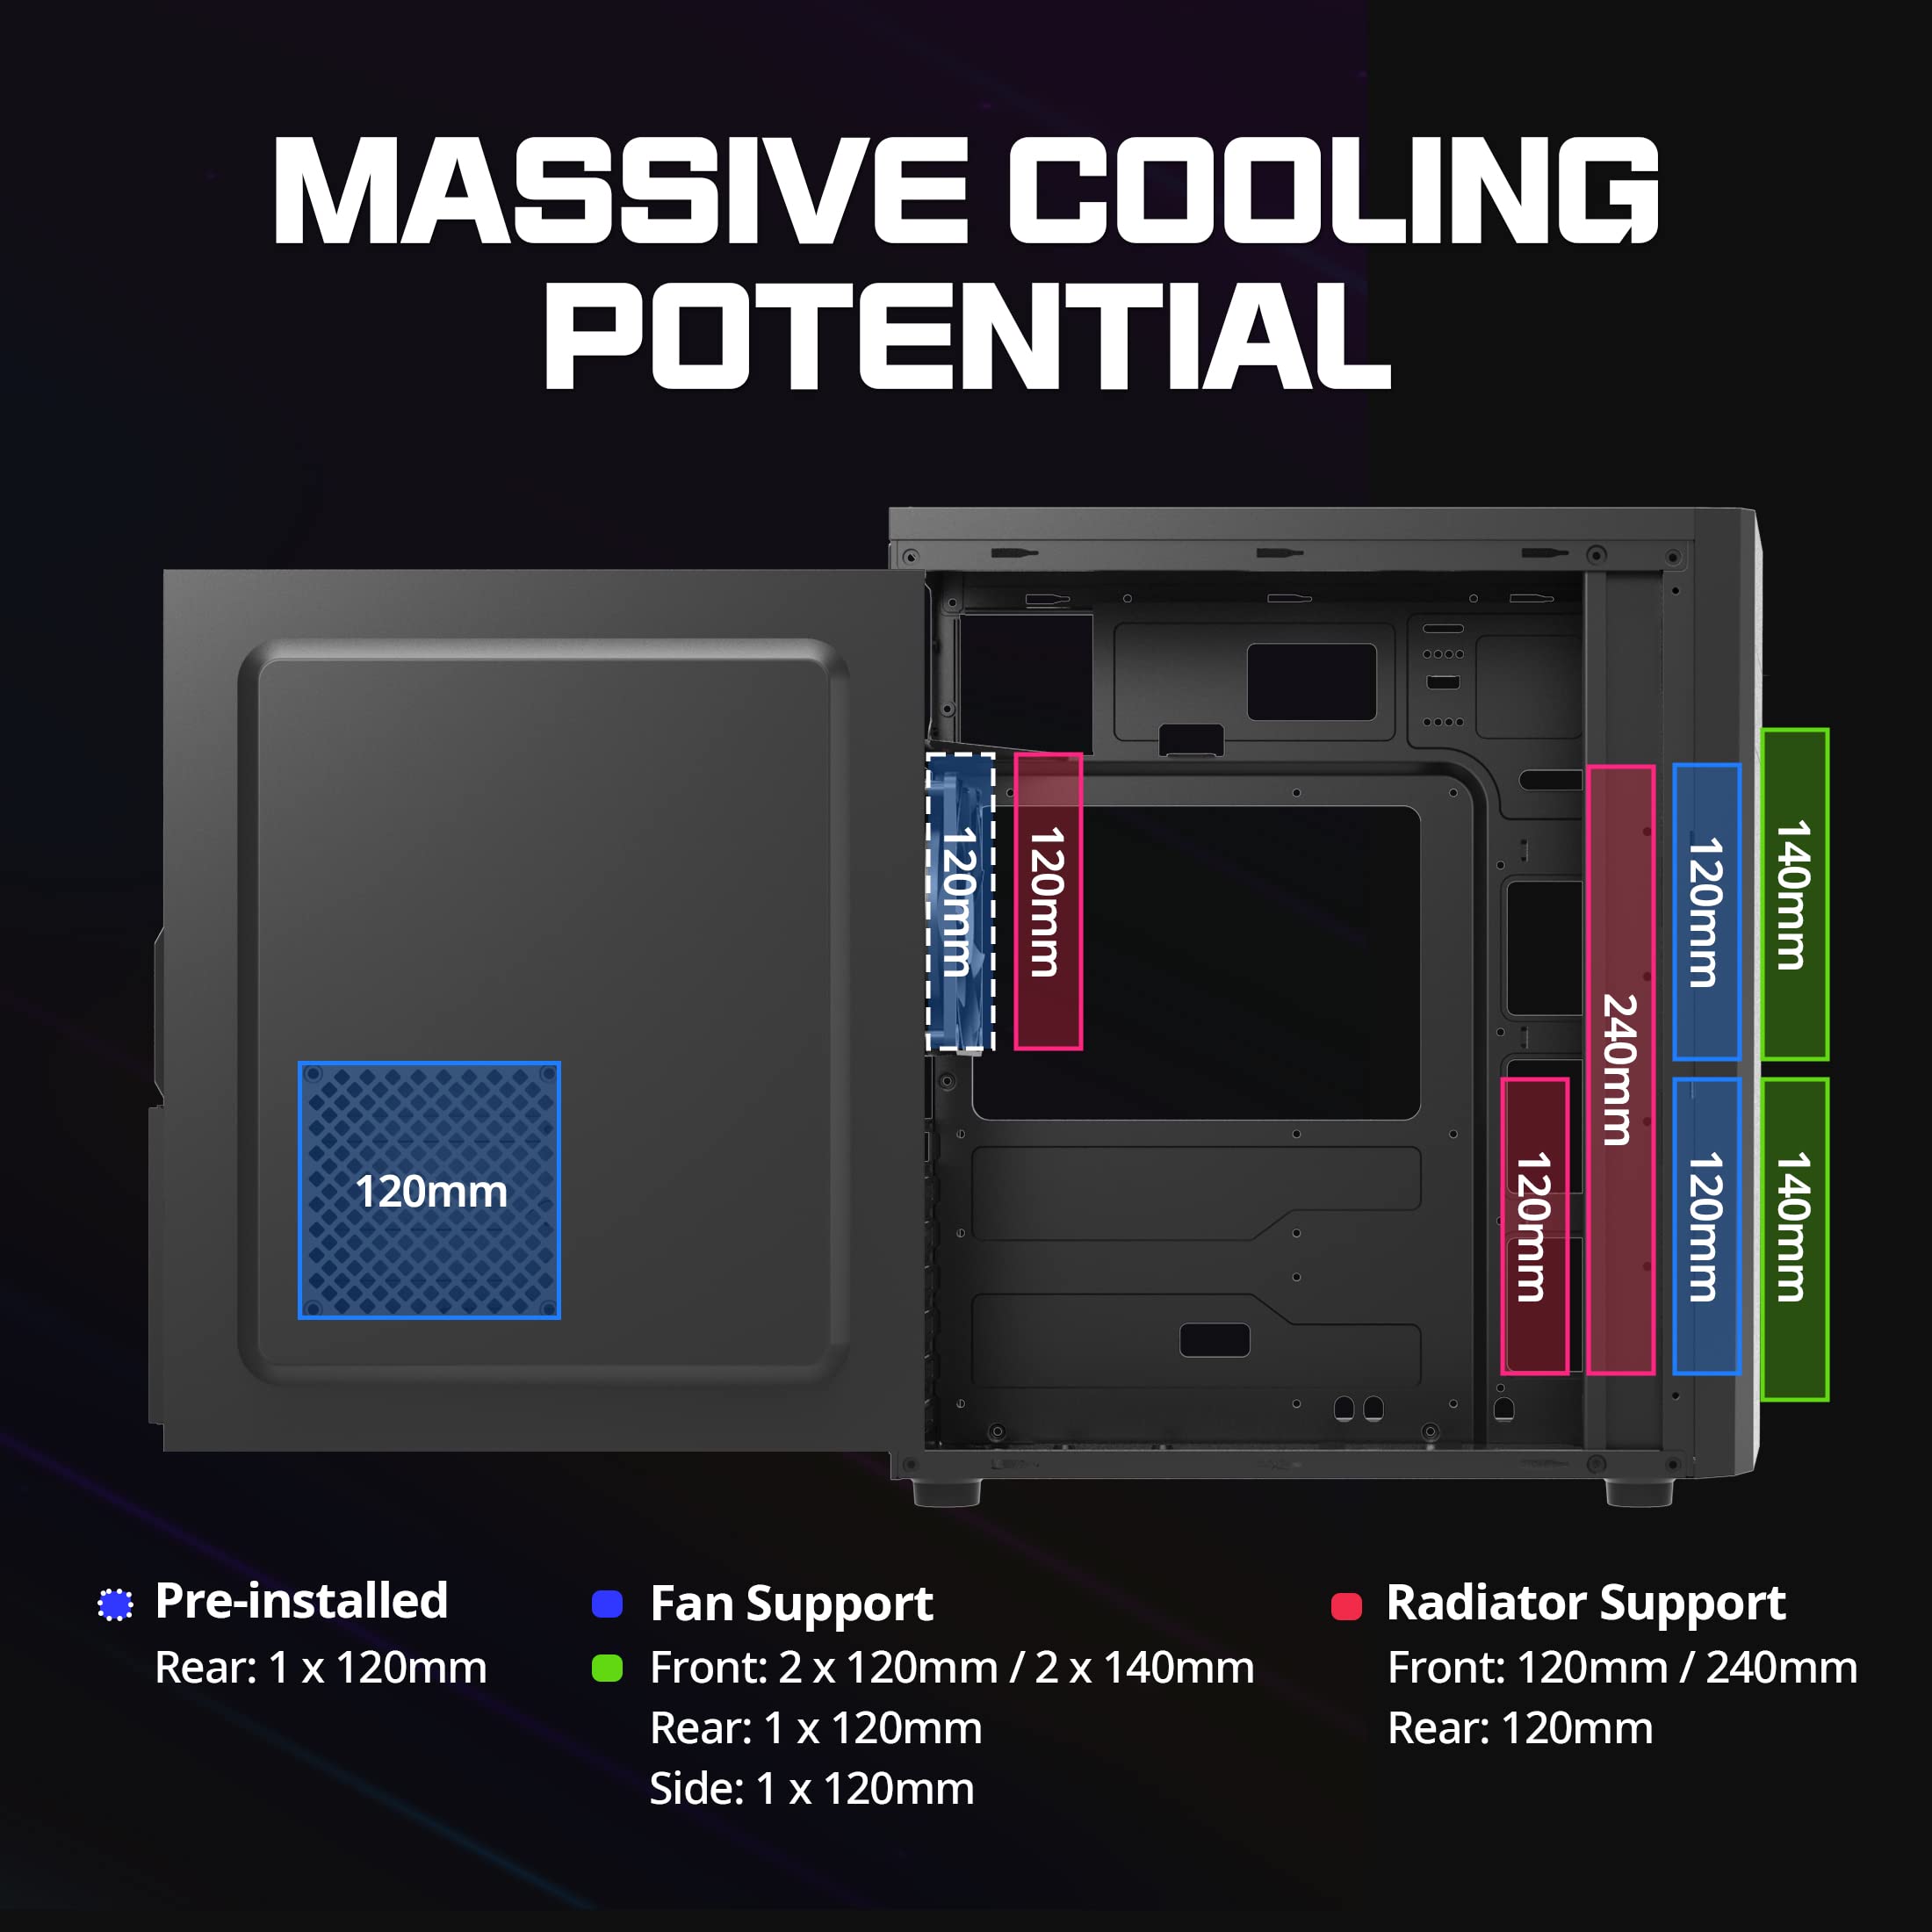 Zalman T8 ATX Mid Tower PC Case, Spectrum RGB Lighting Strip, USB 3.0, 120mm Rear Fan, Detachable 5.25” ODD Drive Cover, Fits mATX ITX Motherboards, Compact Size - Black